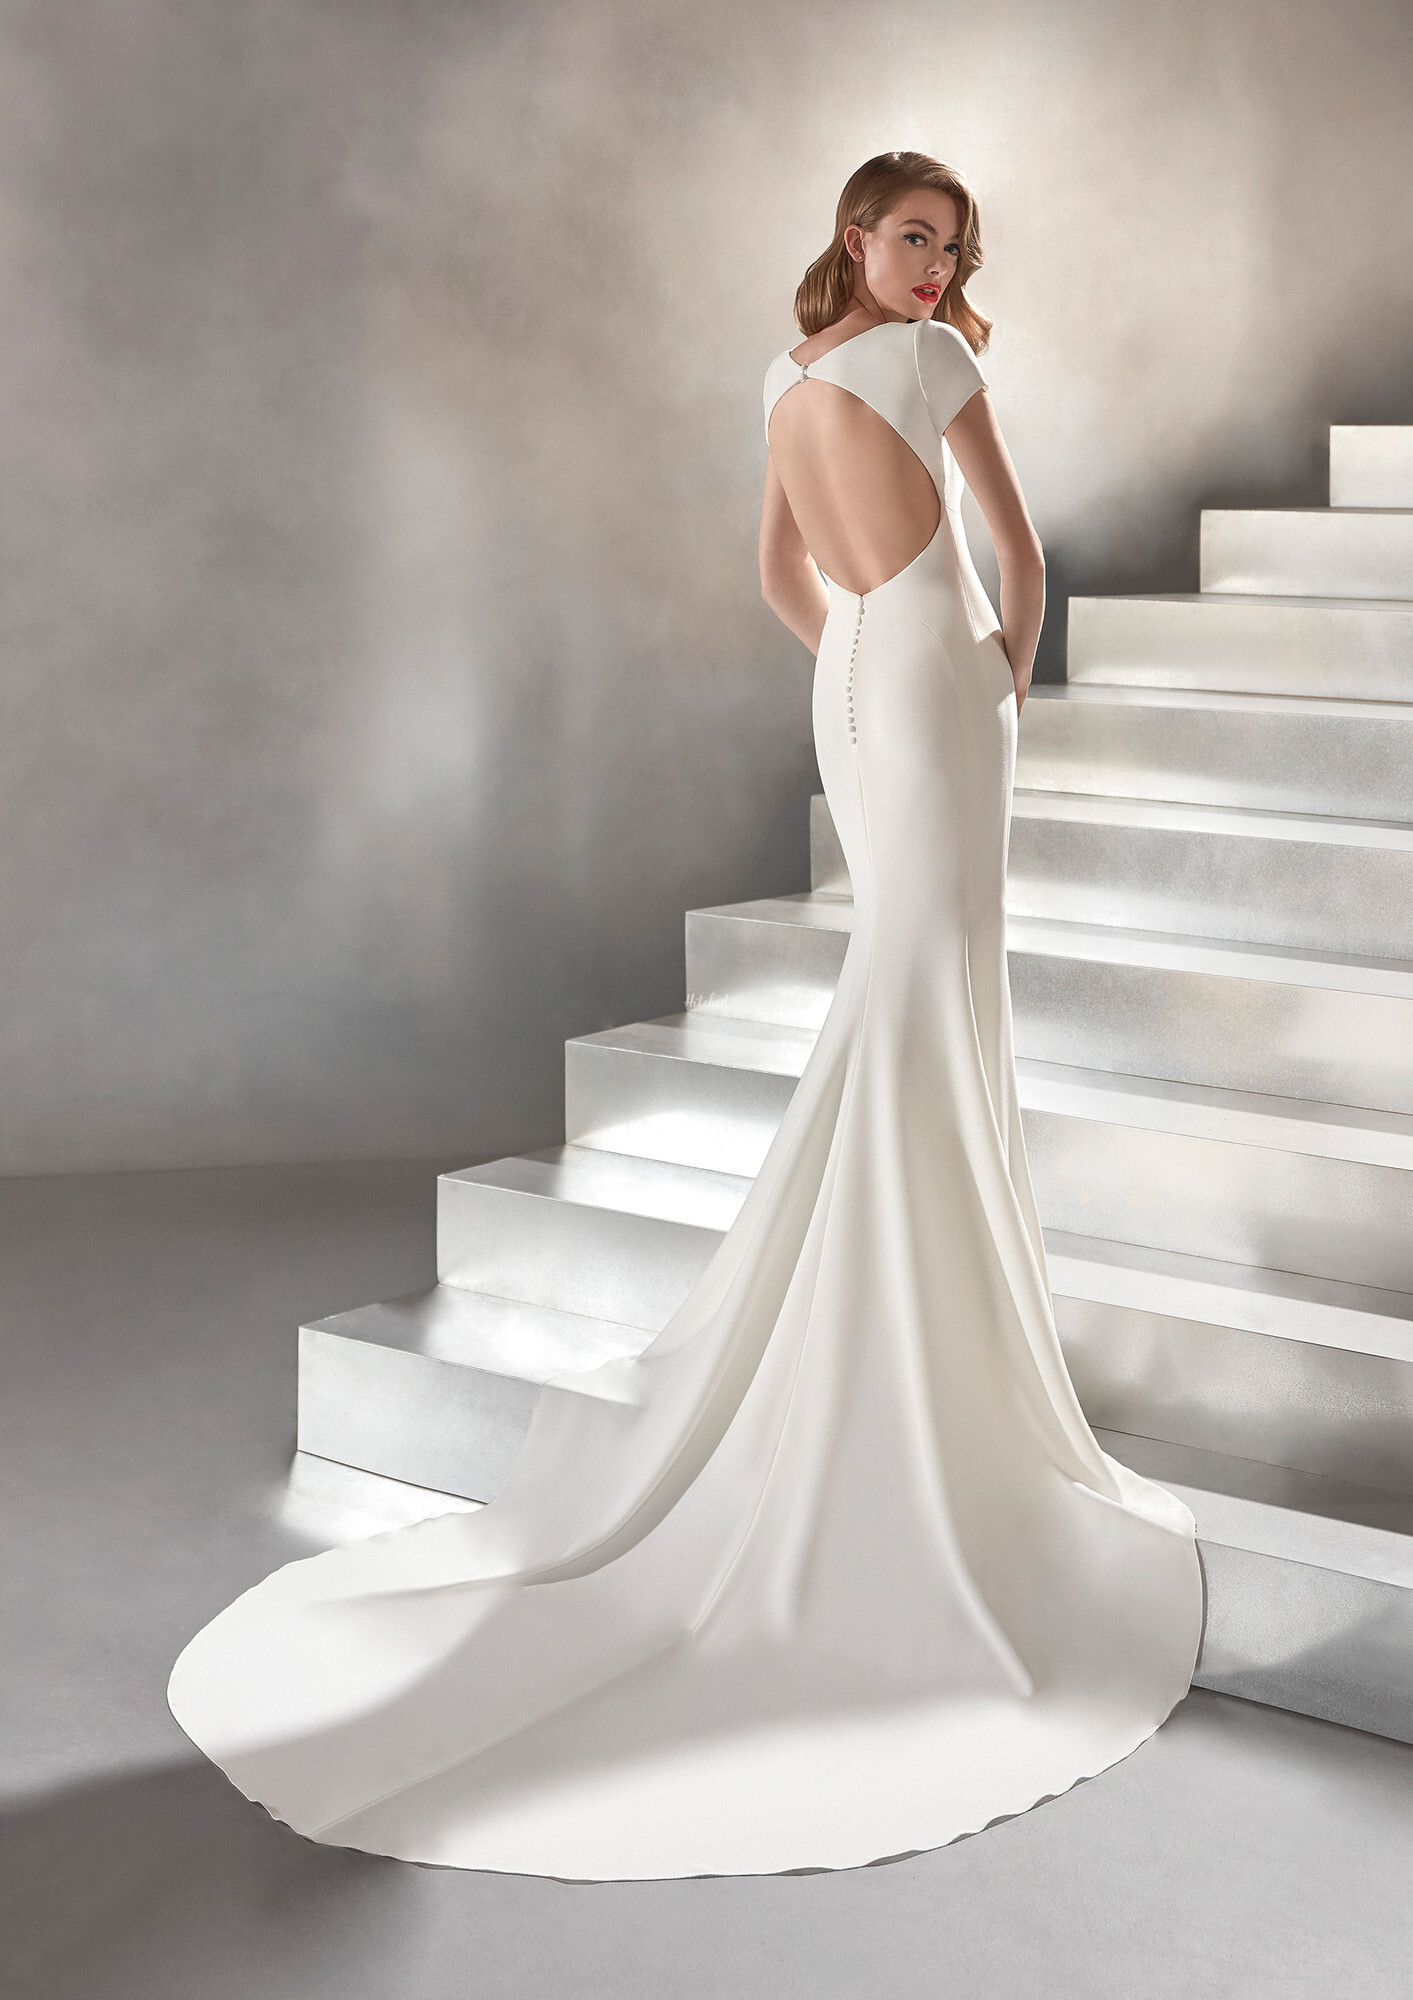 Valeria Wedding Dress From Atelier Pronovias Uk 5775